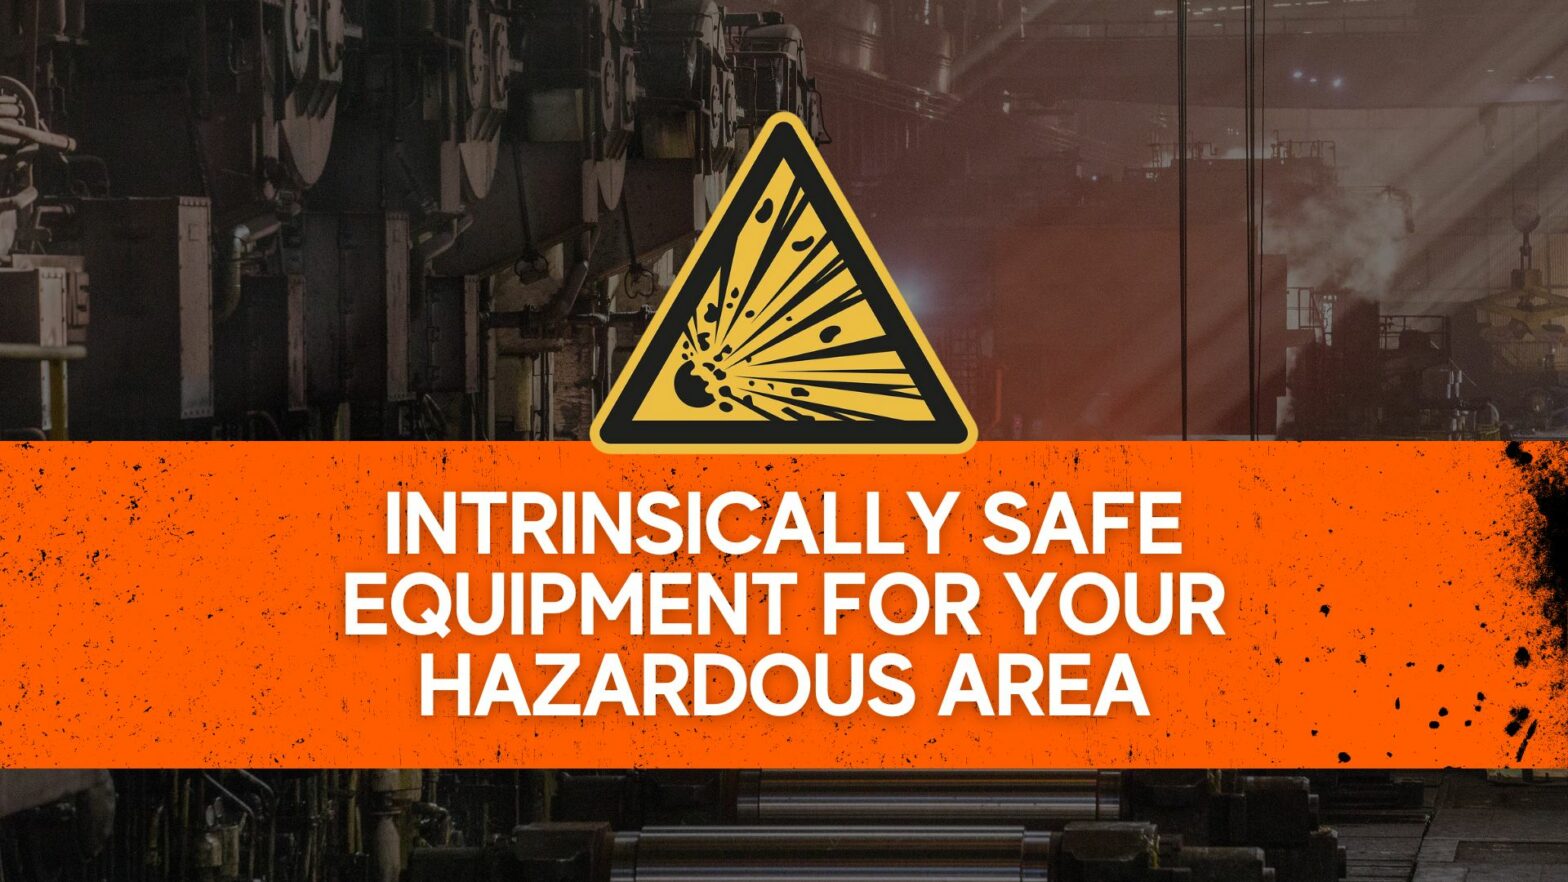 Intrinsically Safe equipment for your hazardous area